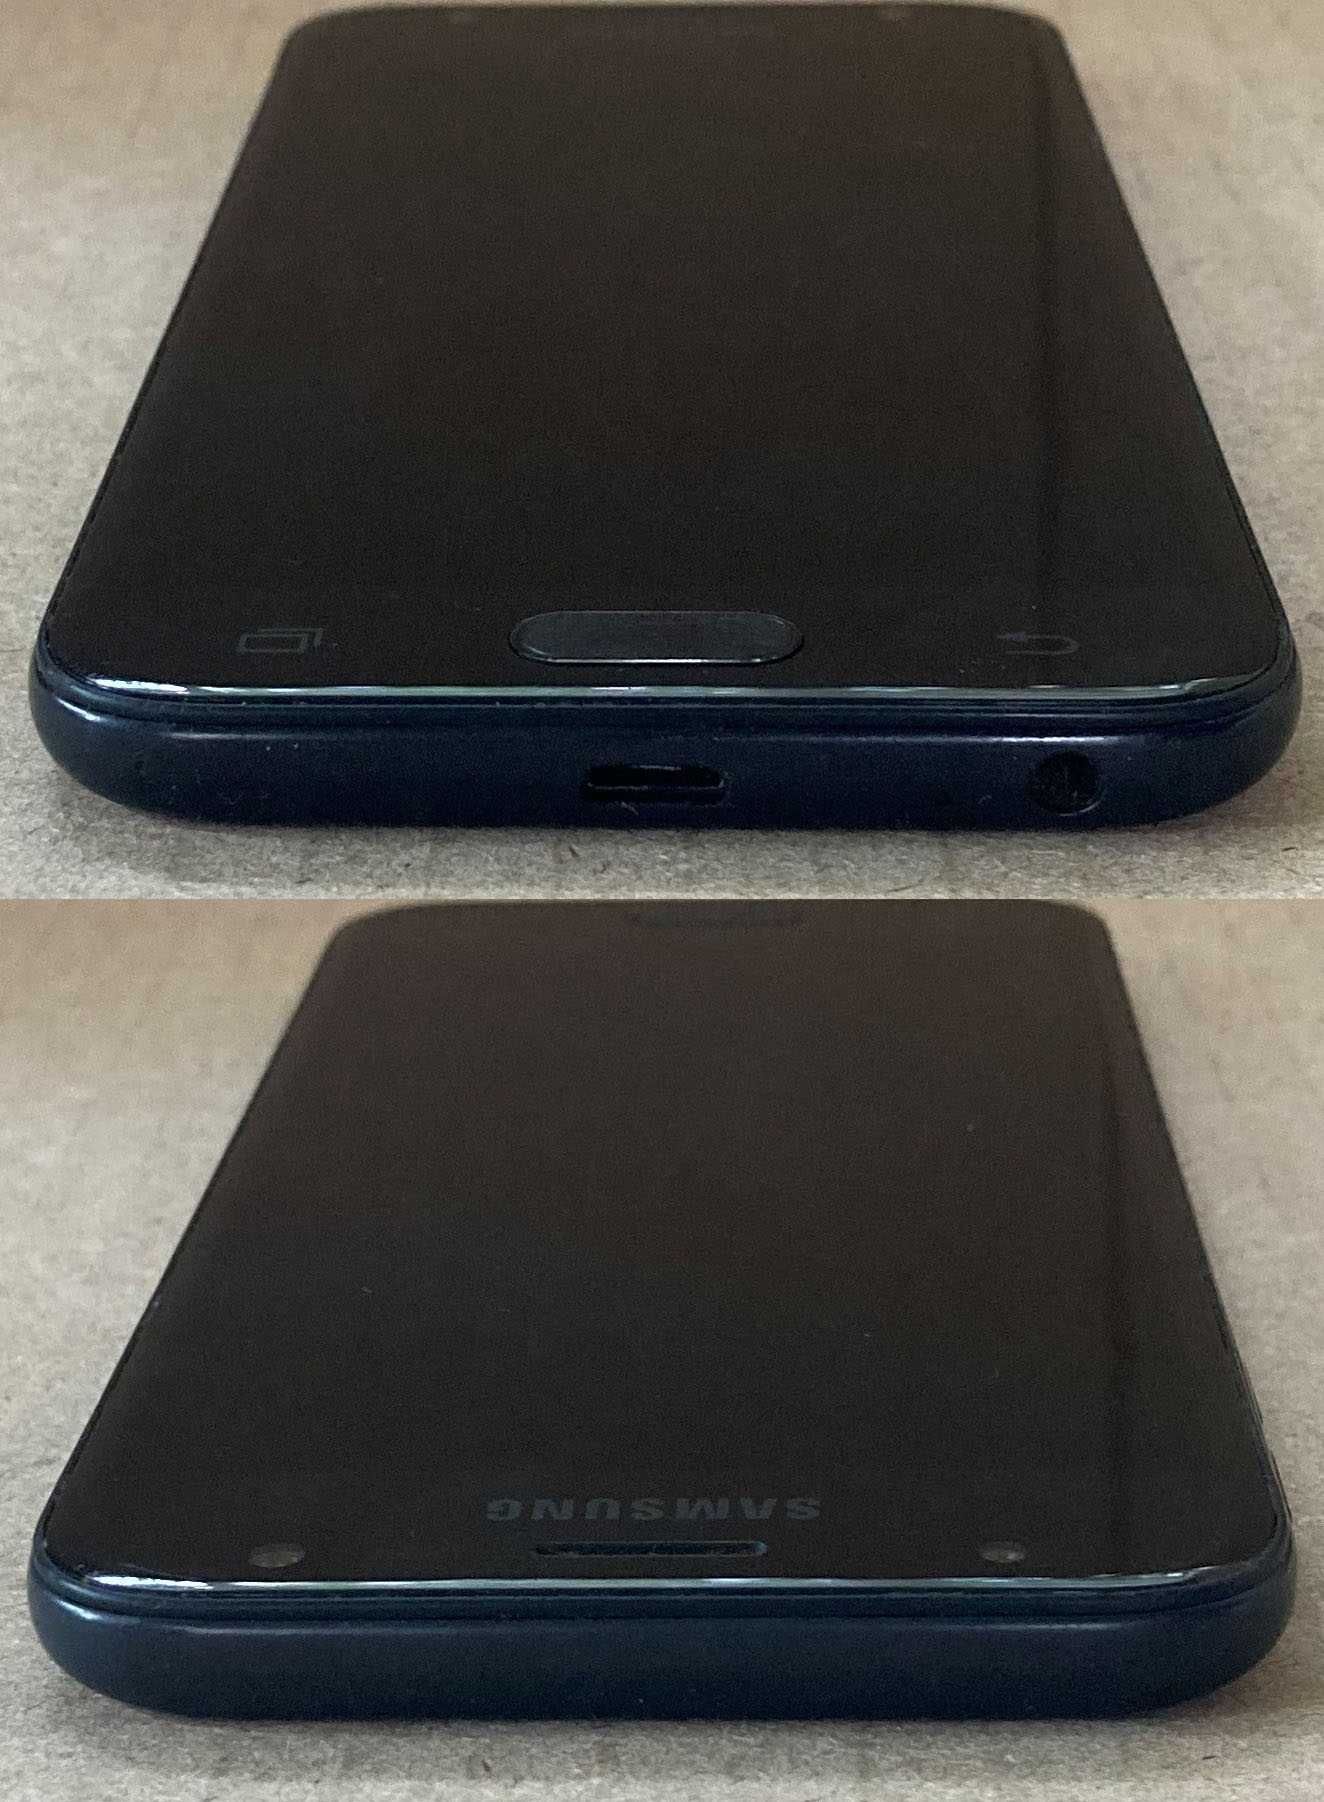 Samsung Galaxy J3 2017 Black (SM-J330FN)